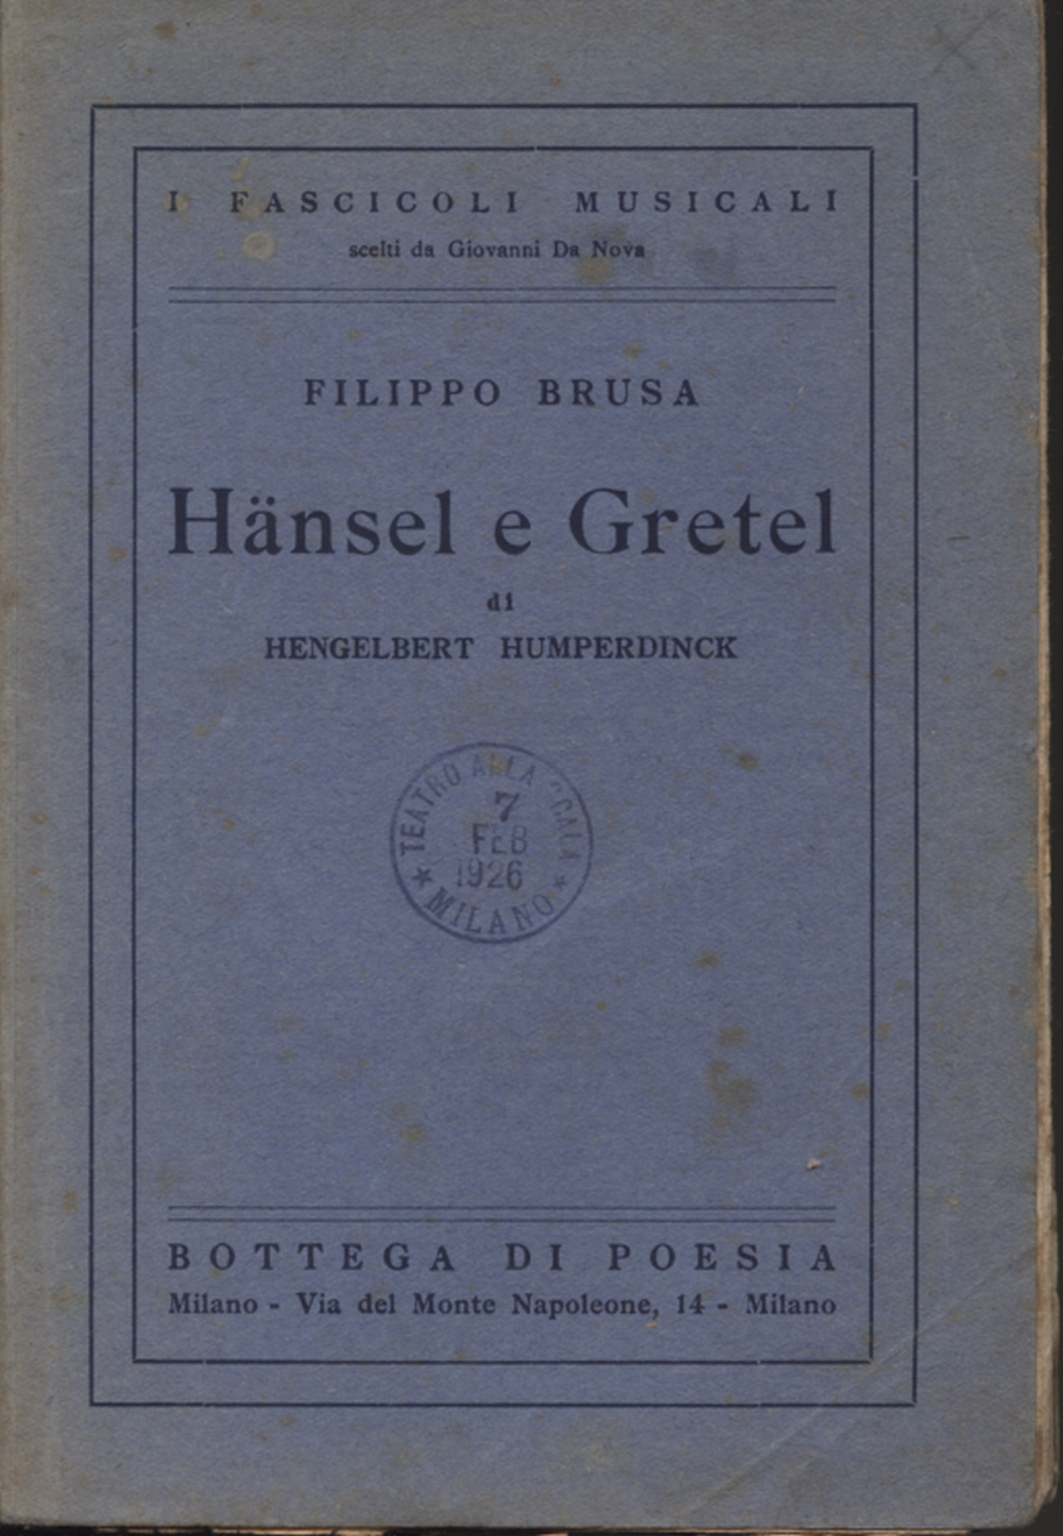 Hänsel e Gretel di Hengelbert Humperdinck, Filippo Brusa